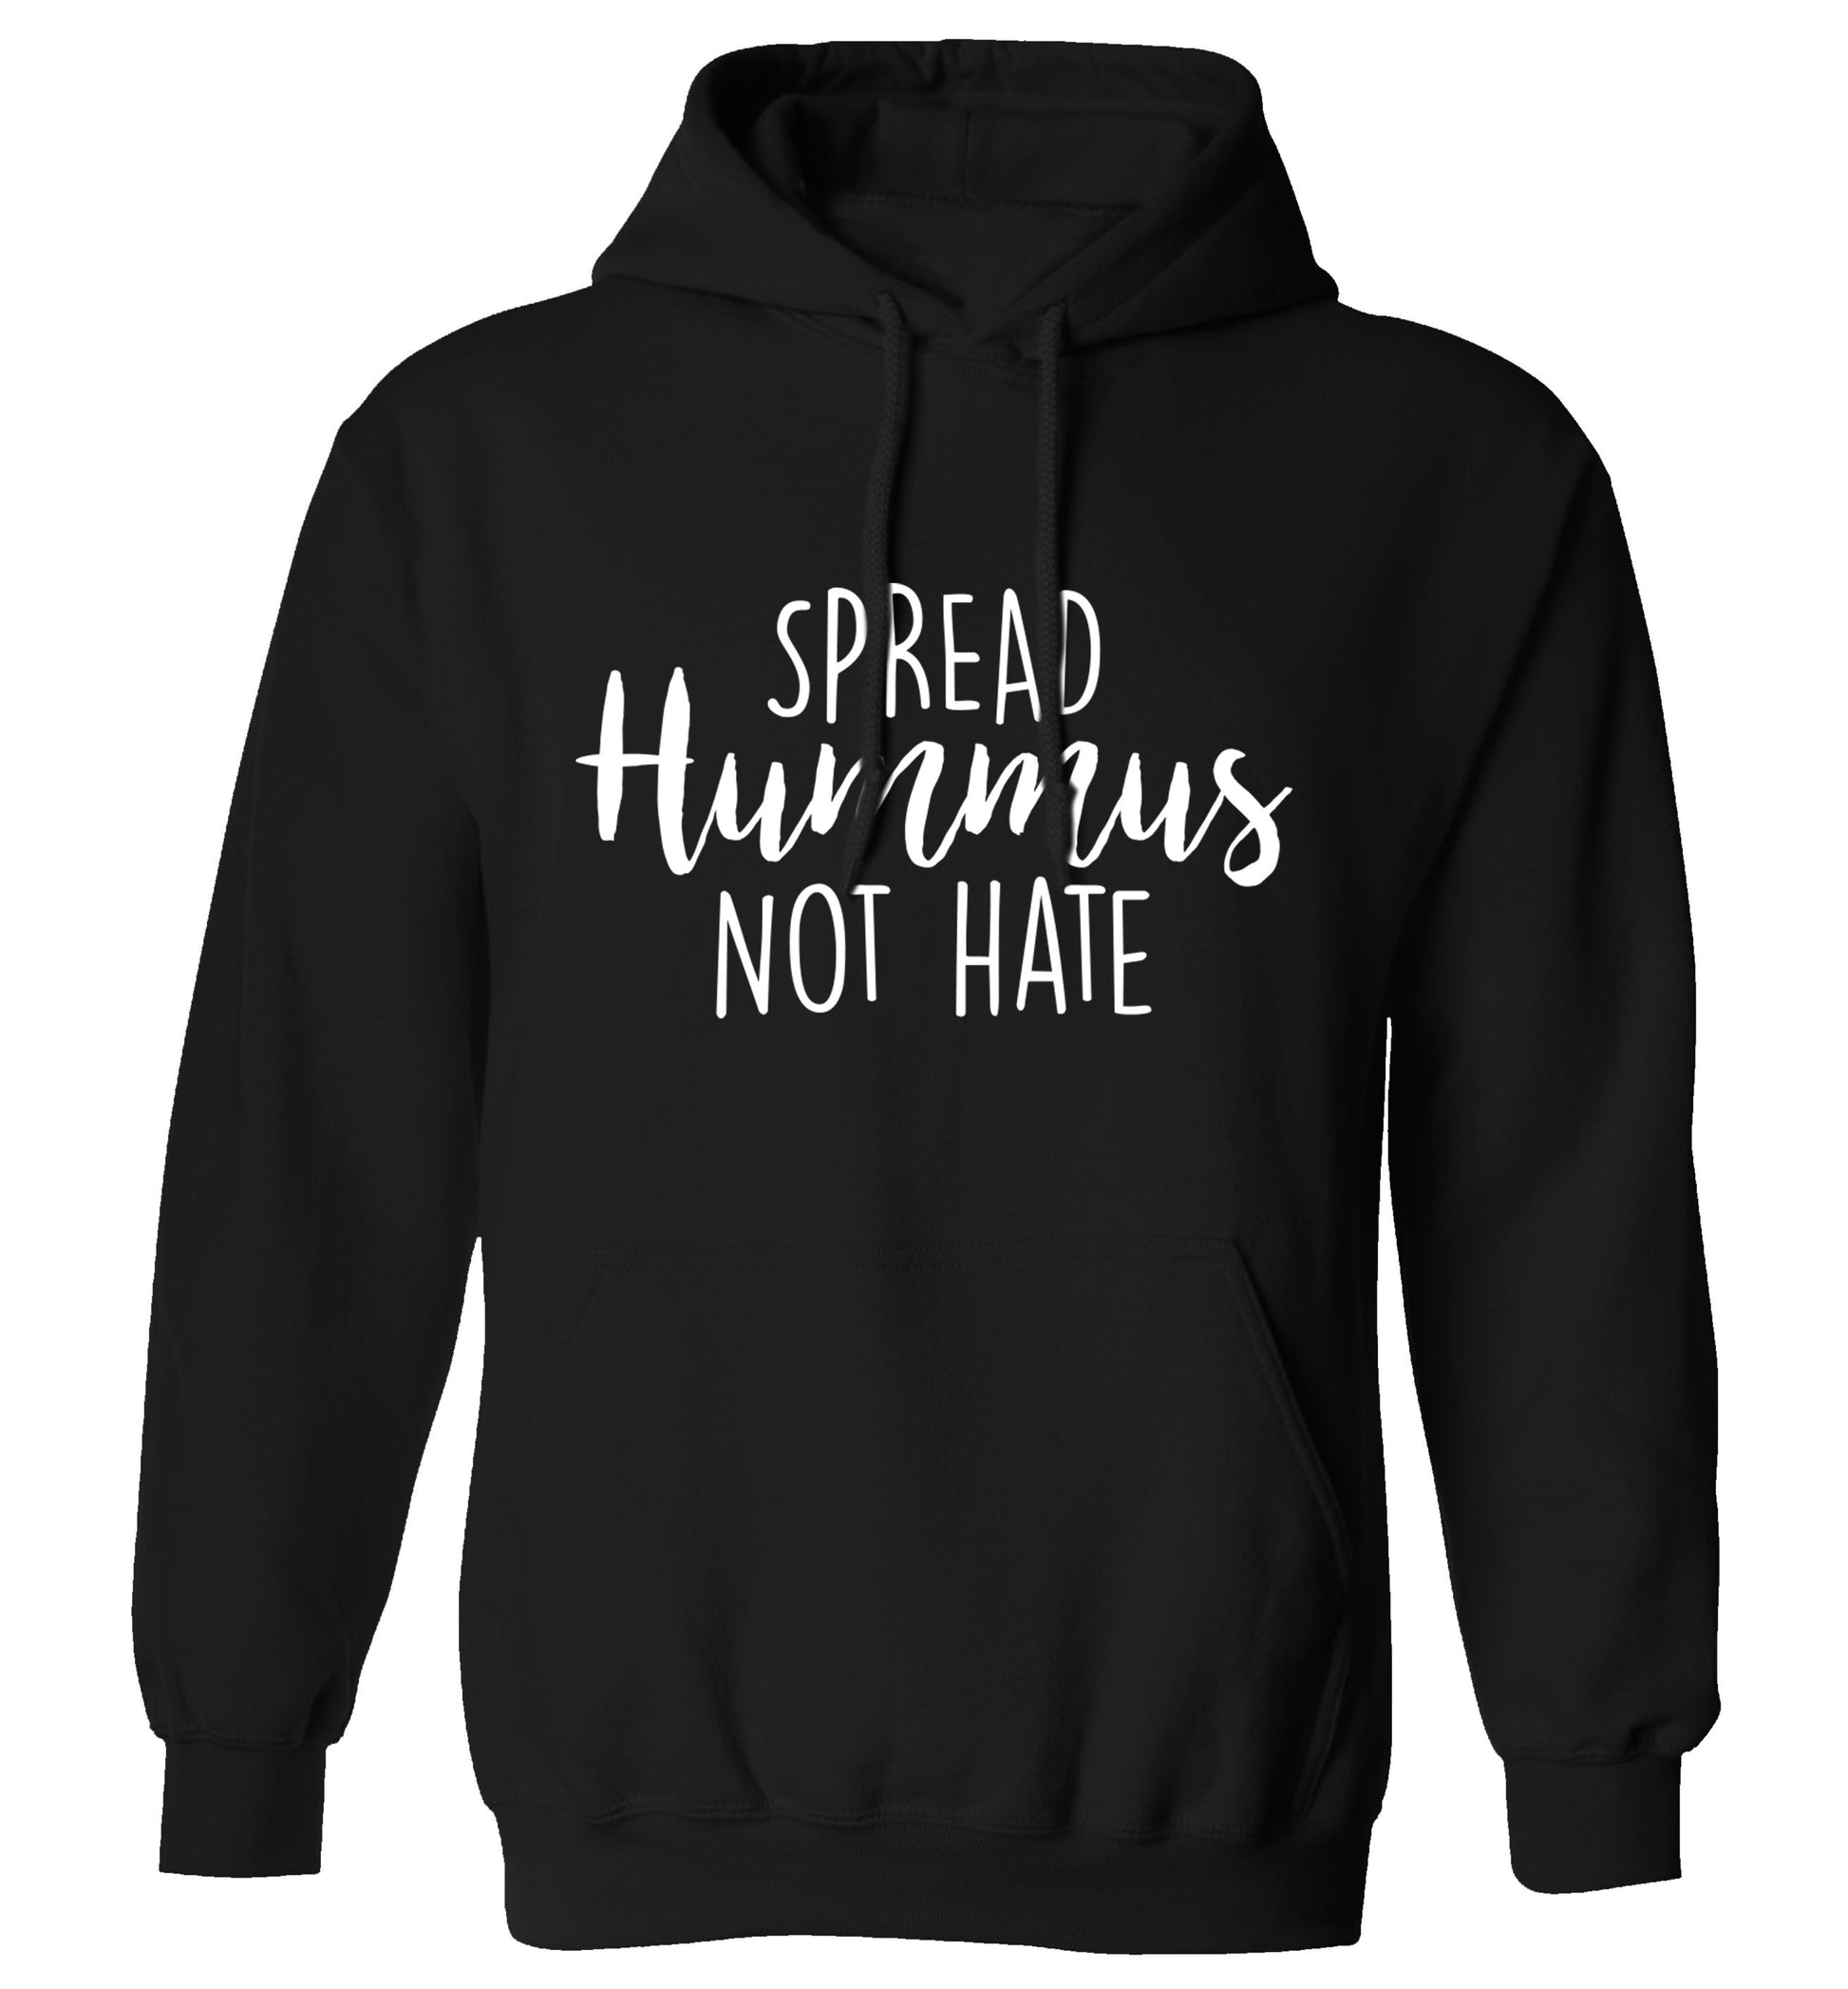 Spread hummus not hate script text adults unisex black hoodie 2XL